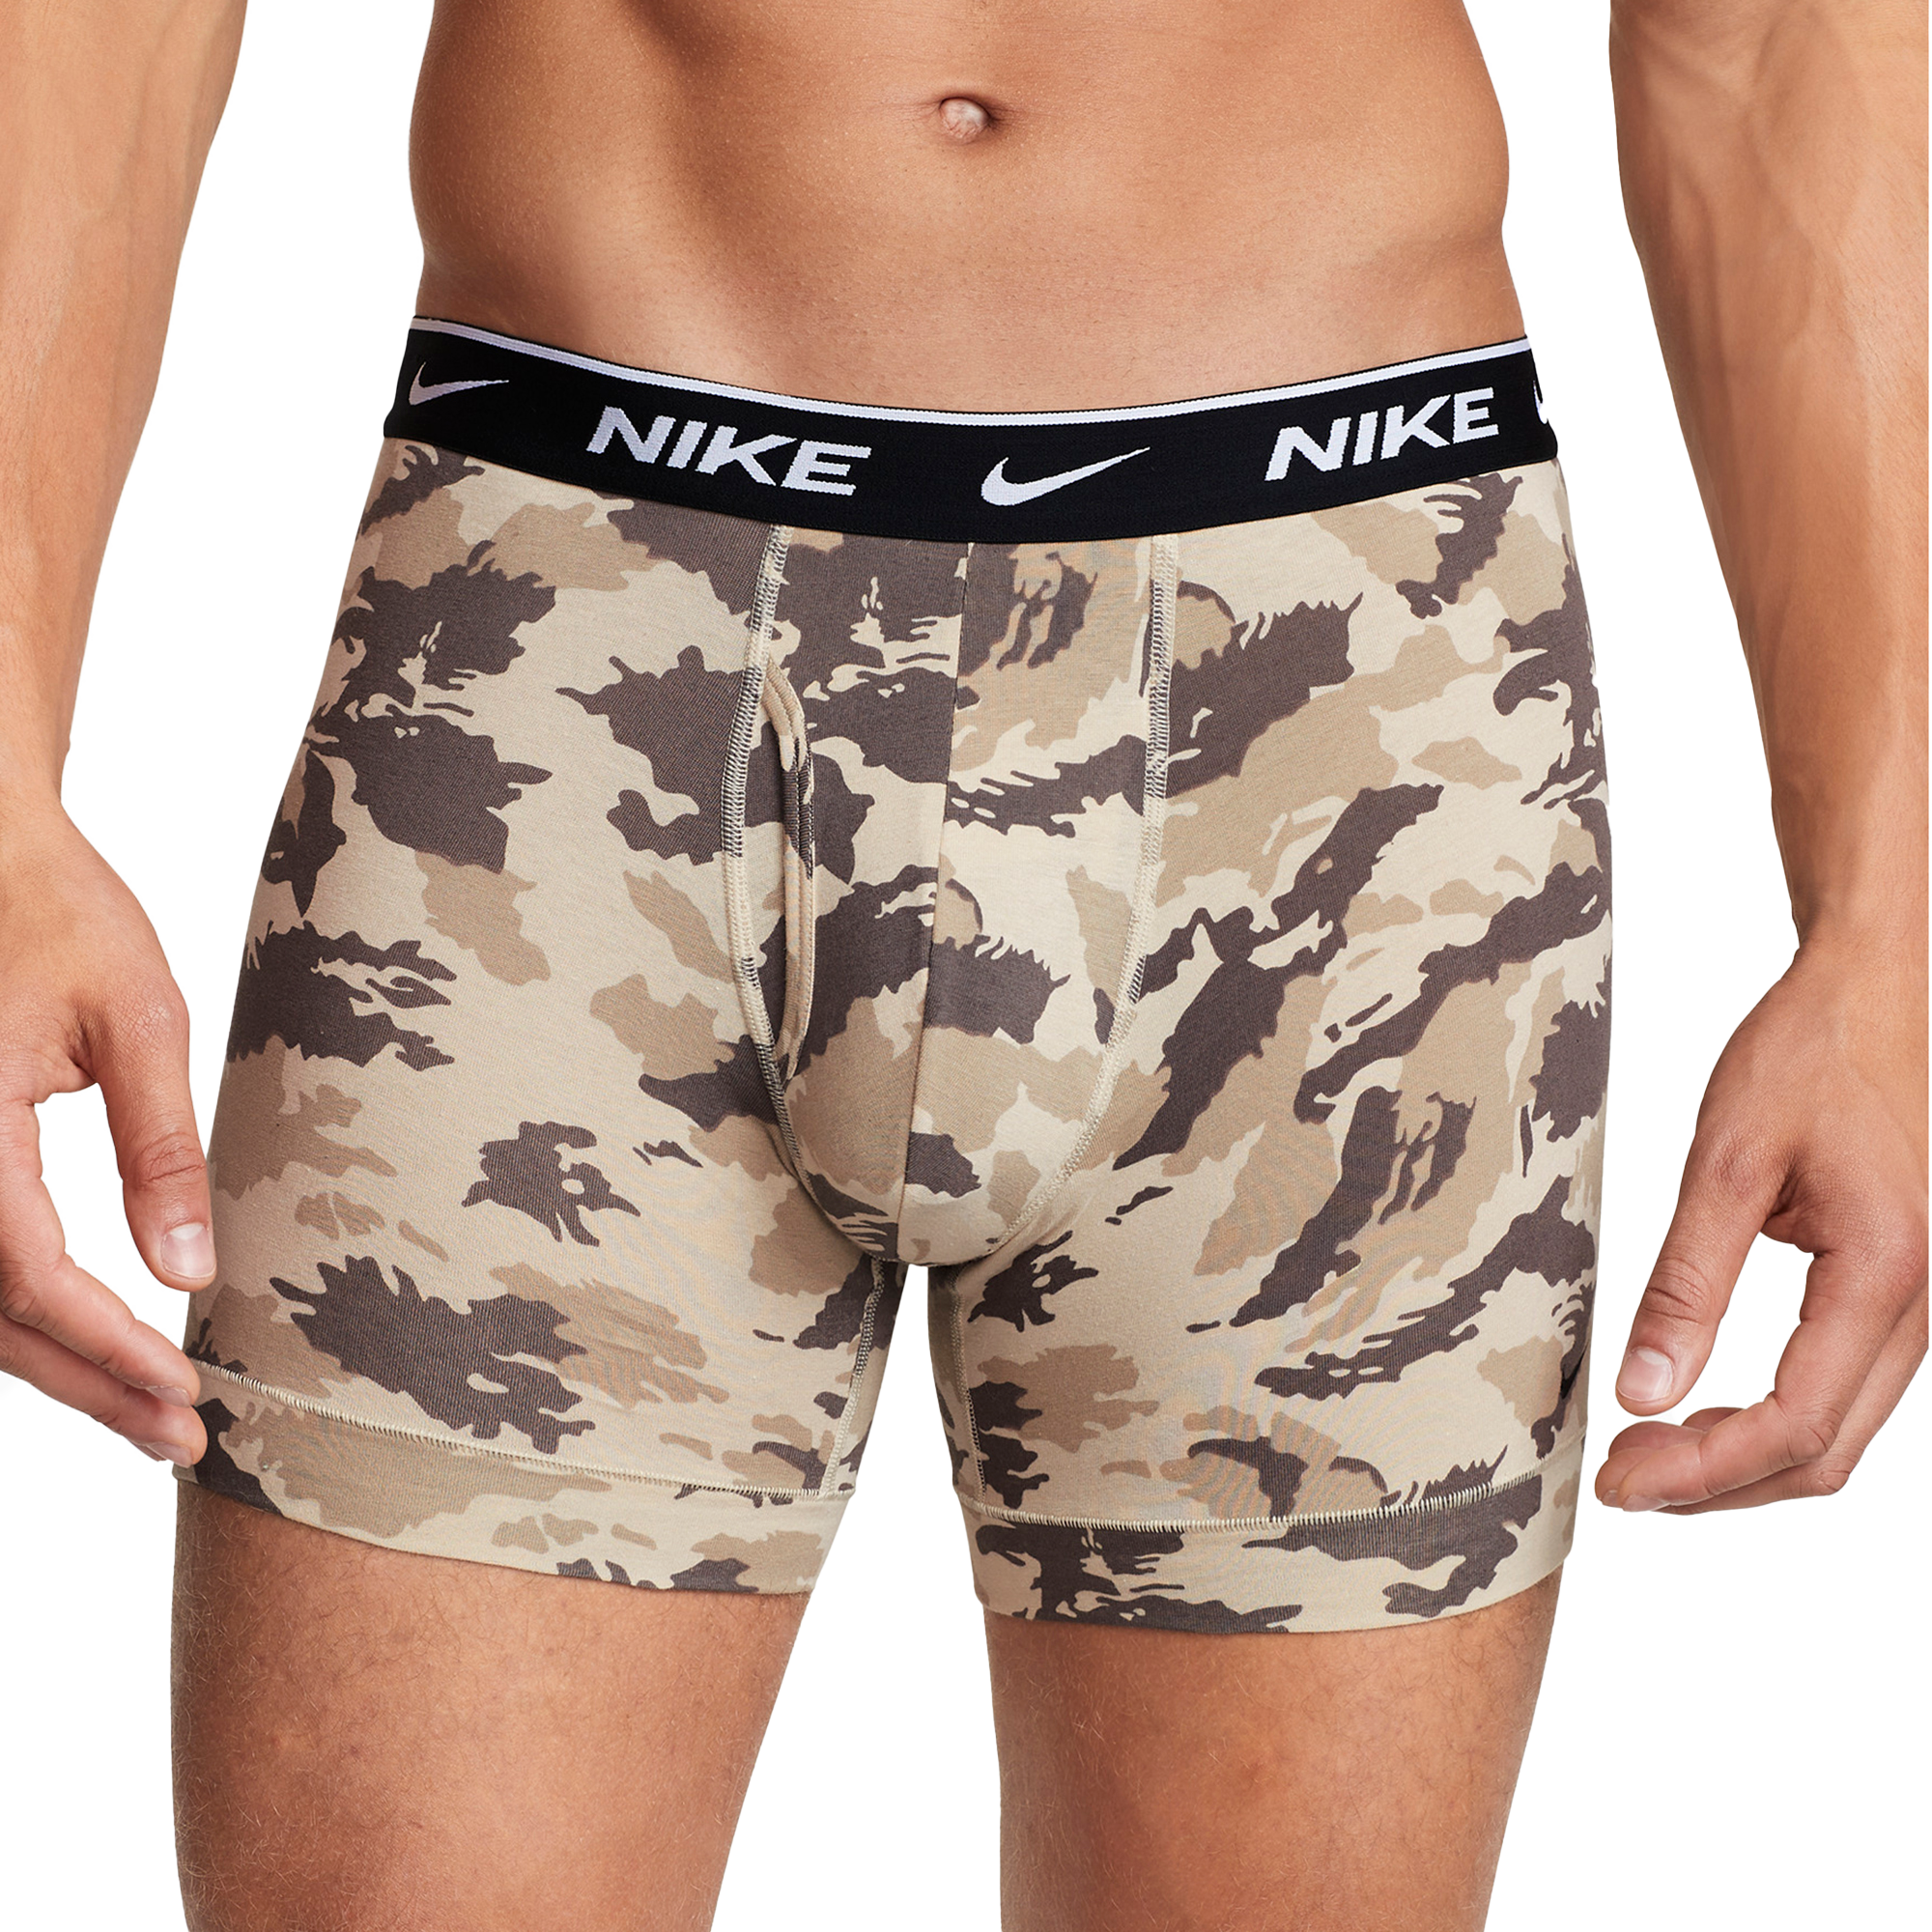 Nike Men's Everyday Cotton Stretch Boxer Briefs-3PK-Khaki/Black